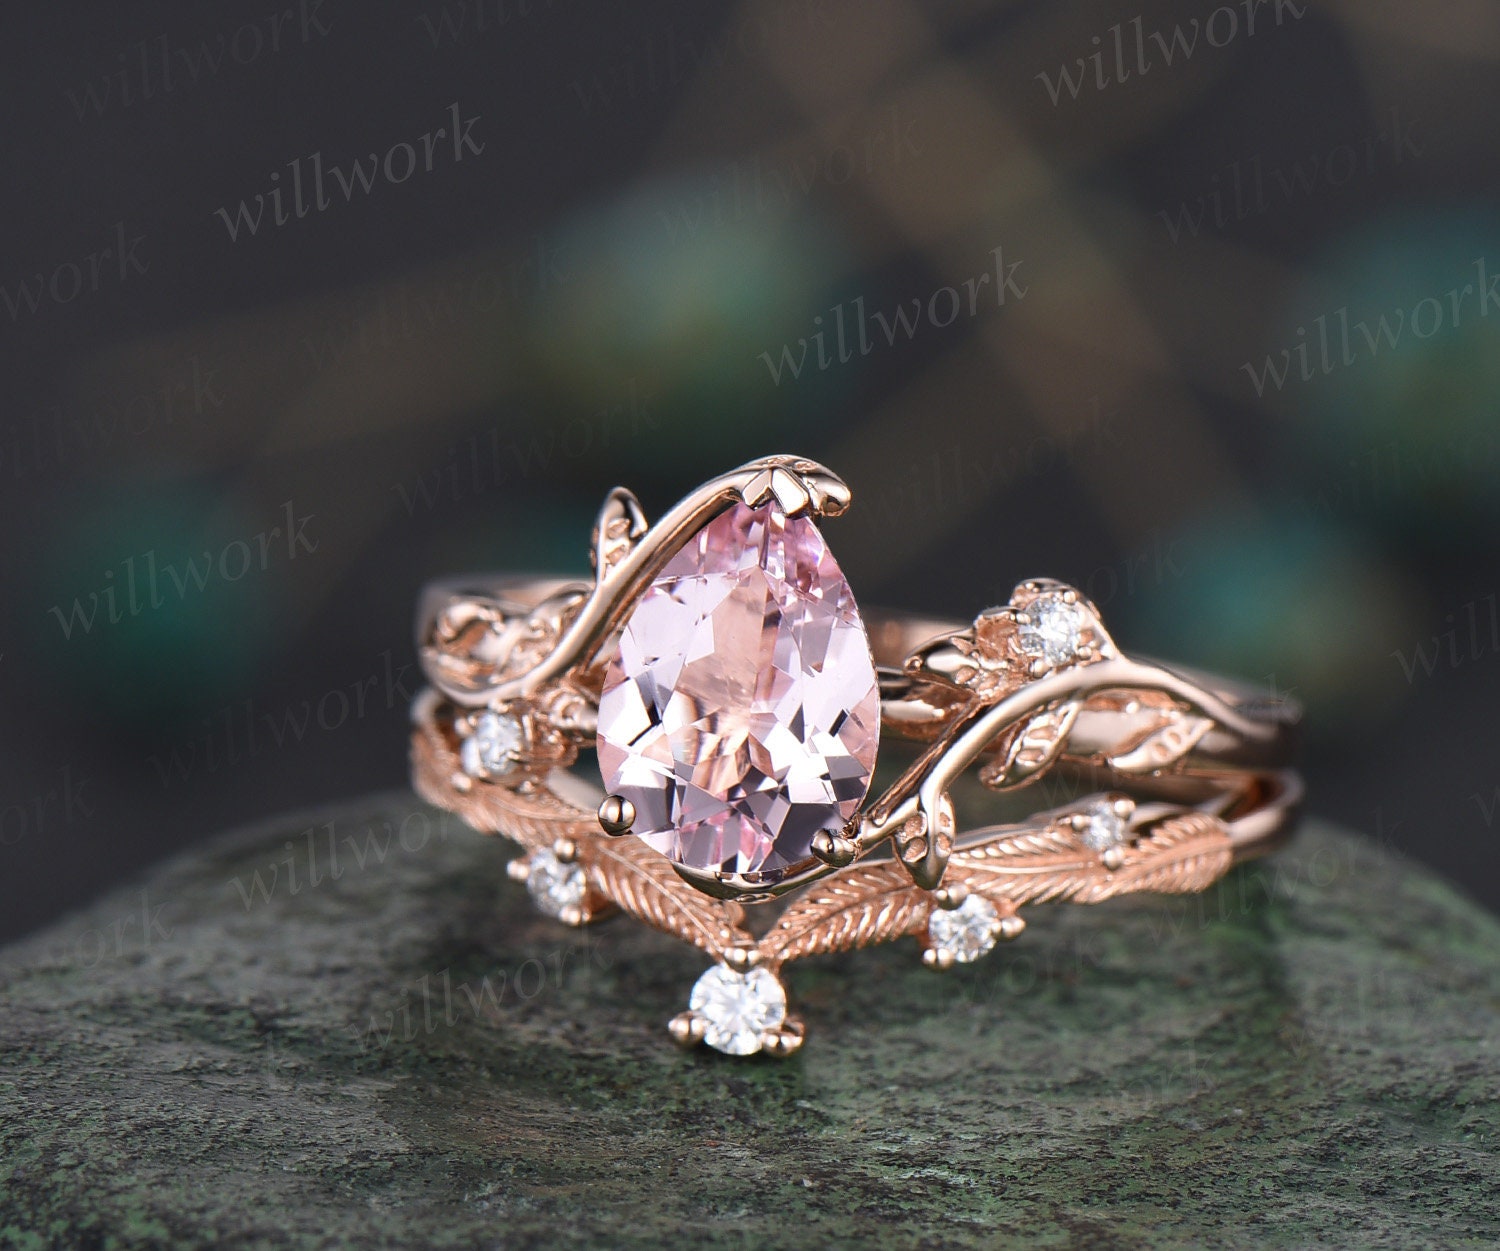 14K Rose Gold Emerald Cut Emerald Engagement Ring For Women - MollyJewelryUS